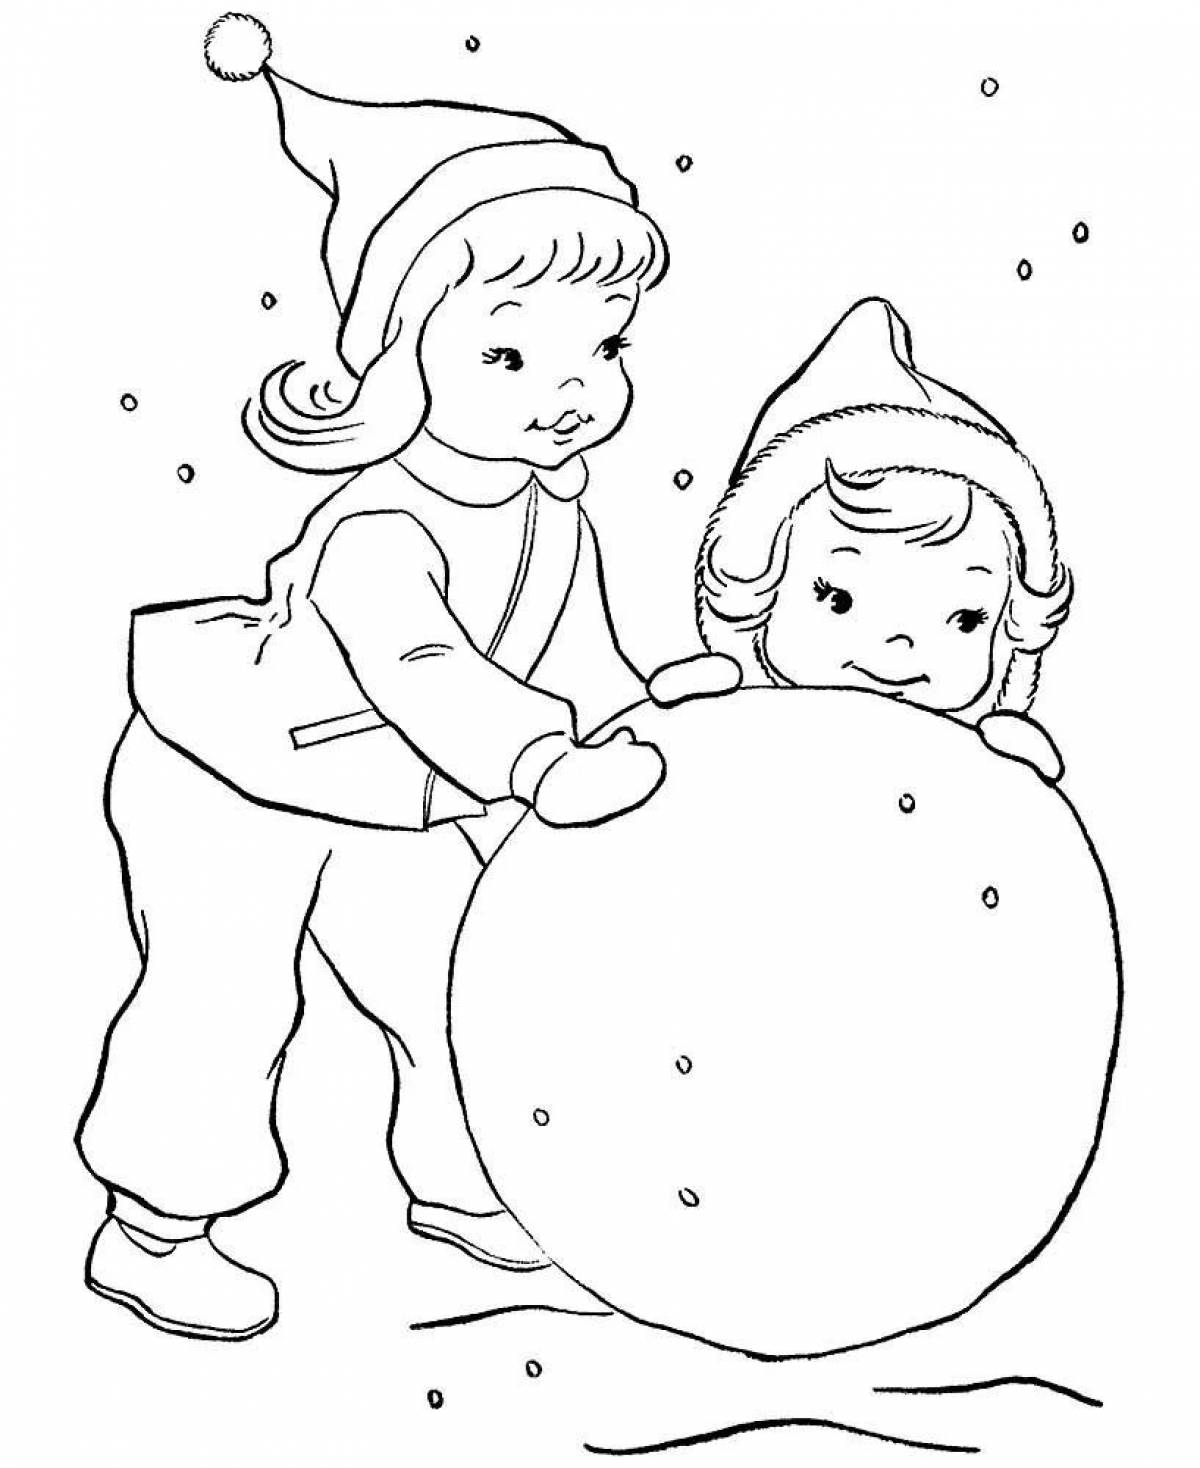 Snowballs for kids #4